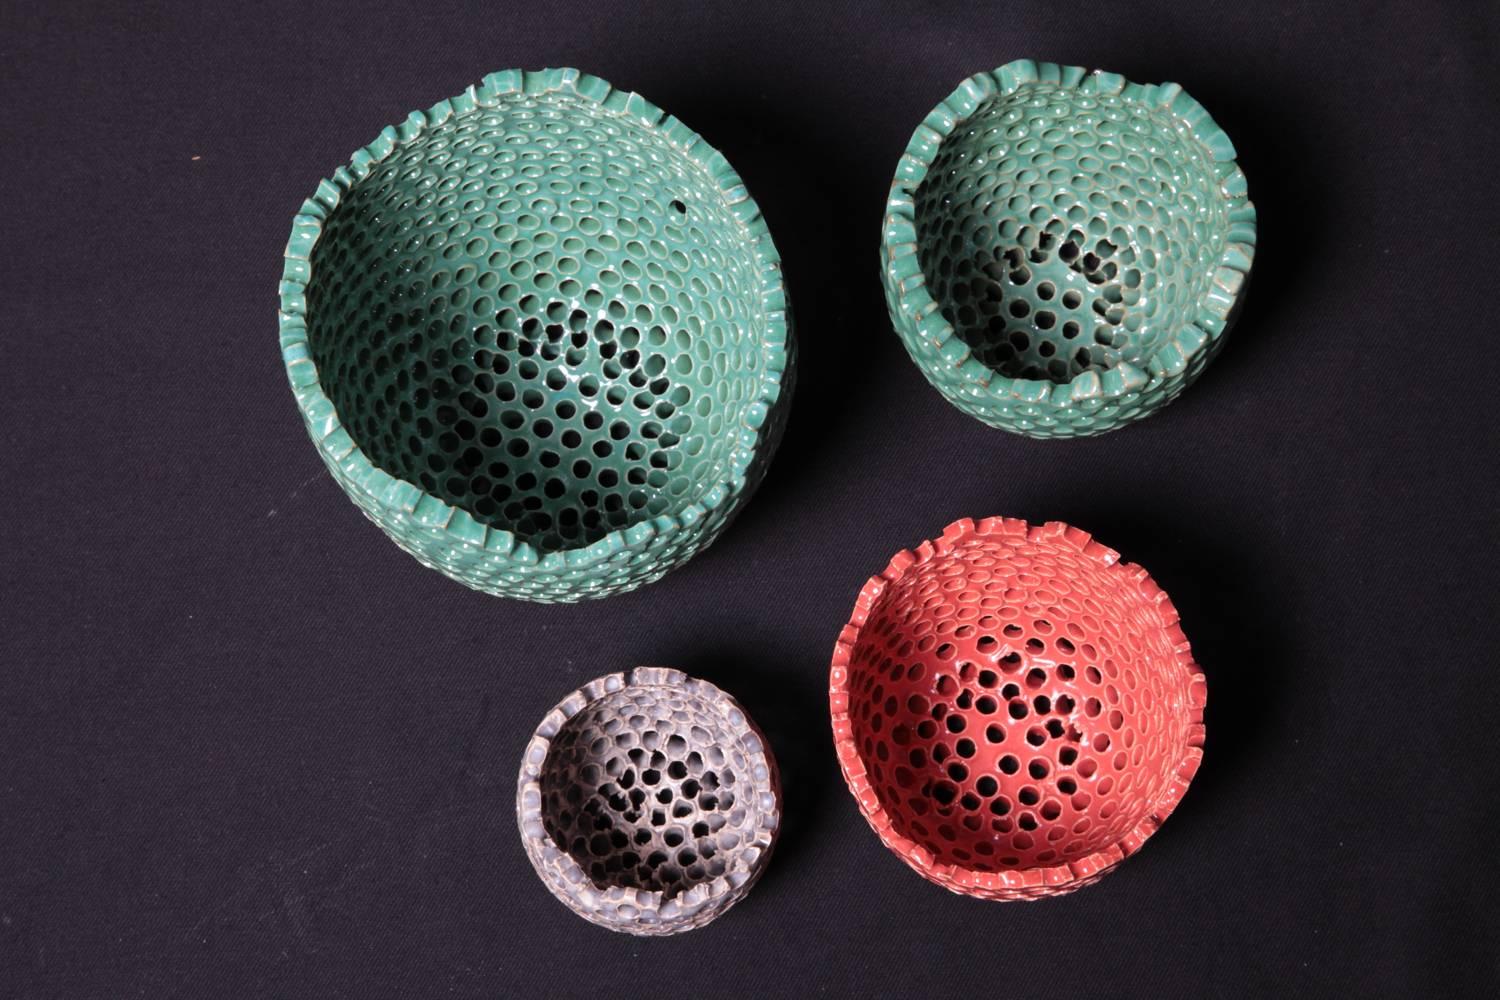 Ceramic bowls by Susanne Protzmann.

Green I H: 13 cm / 5.12 in Ø: 12.5 cm / 4.92 in.
Green II H: 9 cm / 3.54 in Ø: 9.5 cm / 3.74 in
Red H: 9 cm / 3.54 in Ø: 10 cm / 3.94 in.
Grey H: 6.5 cm / 2.56 in Ø: 6.5 cm / 2.56 in.